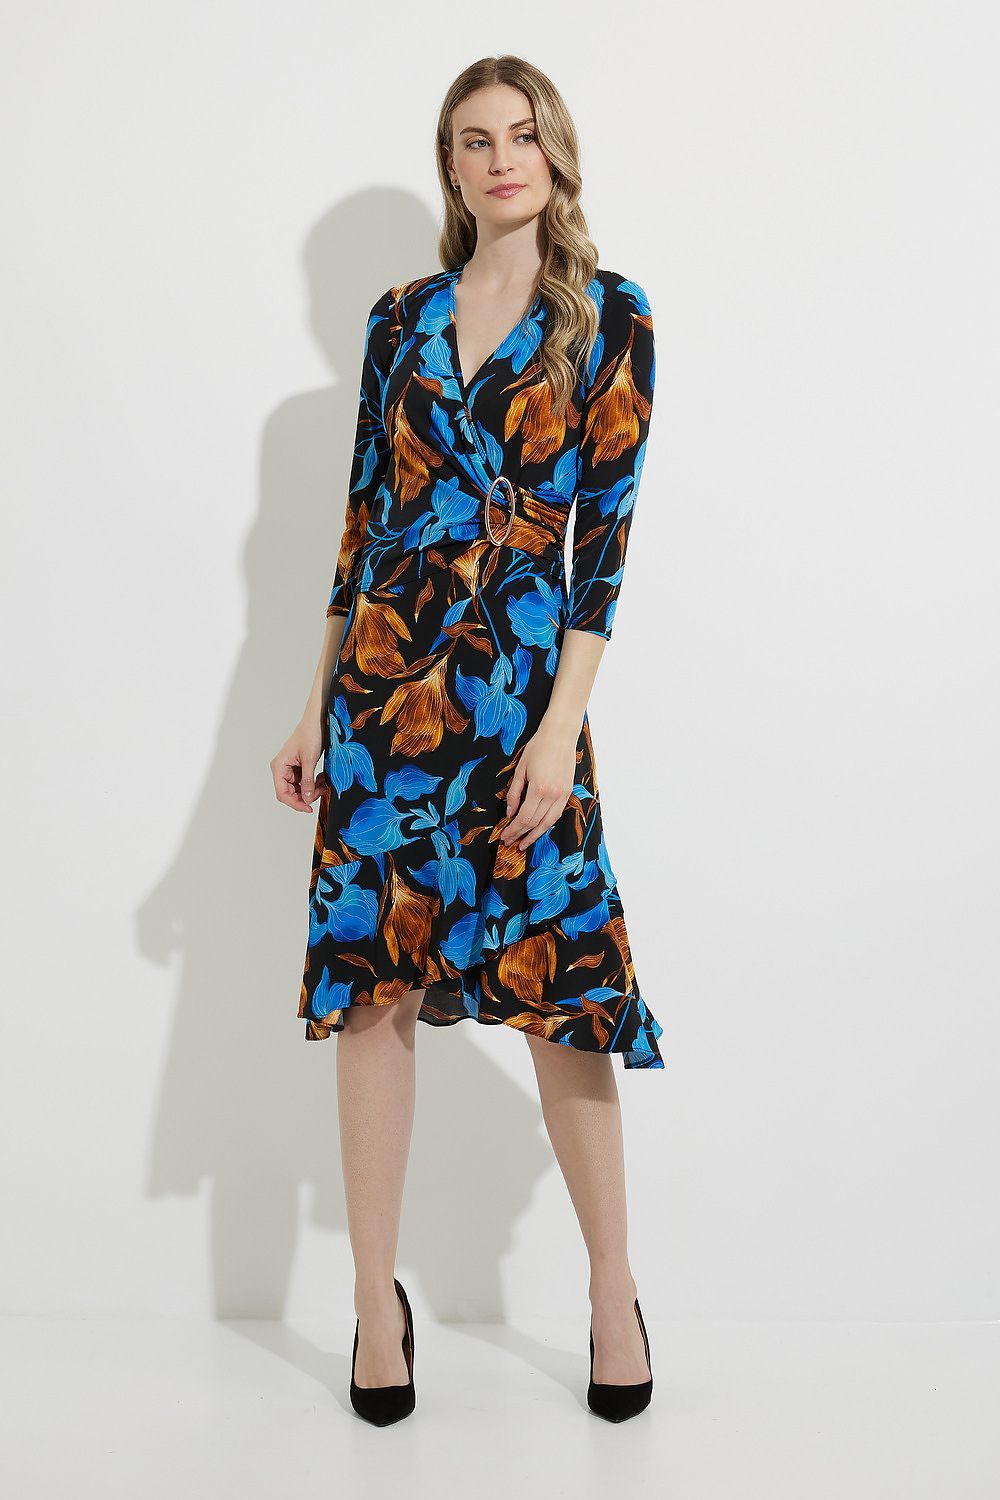 Joseph Ribkoff Floral Print Dress Style 224208. Black/multi